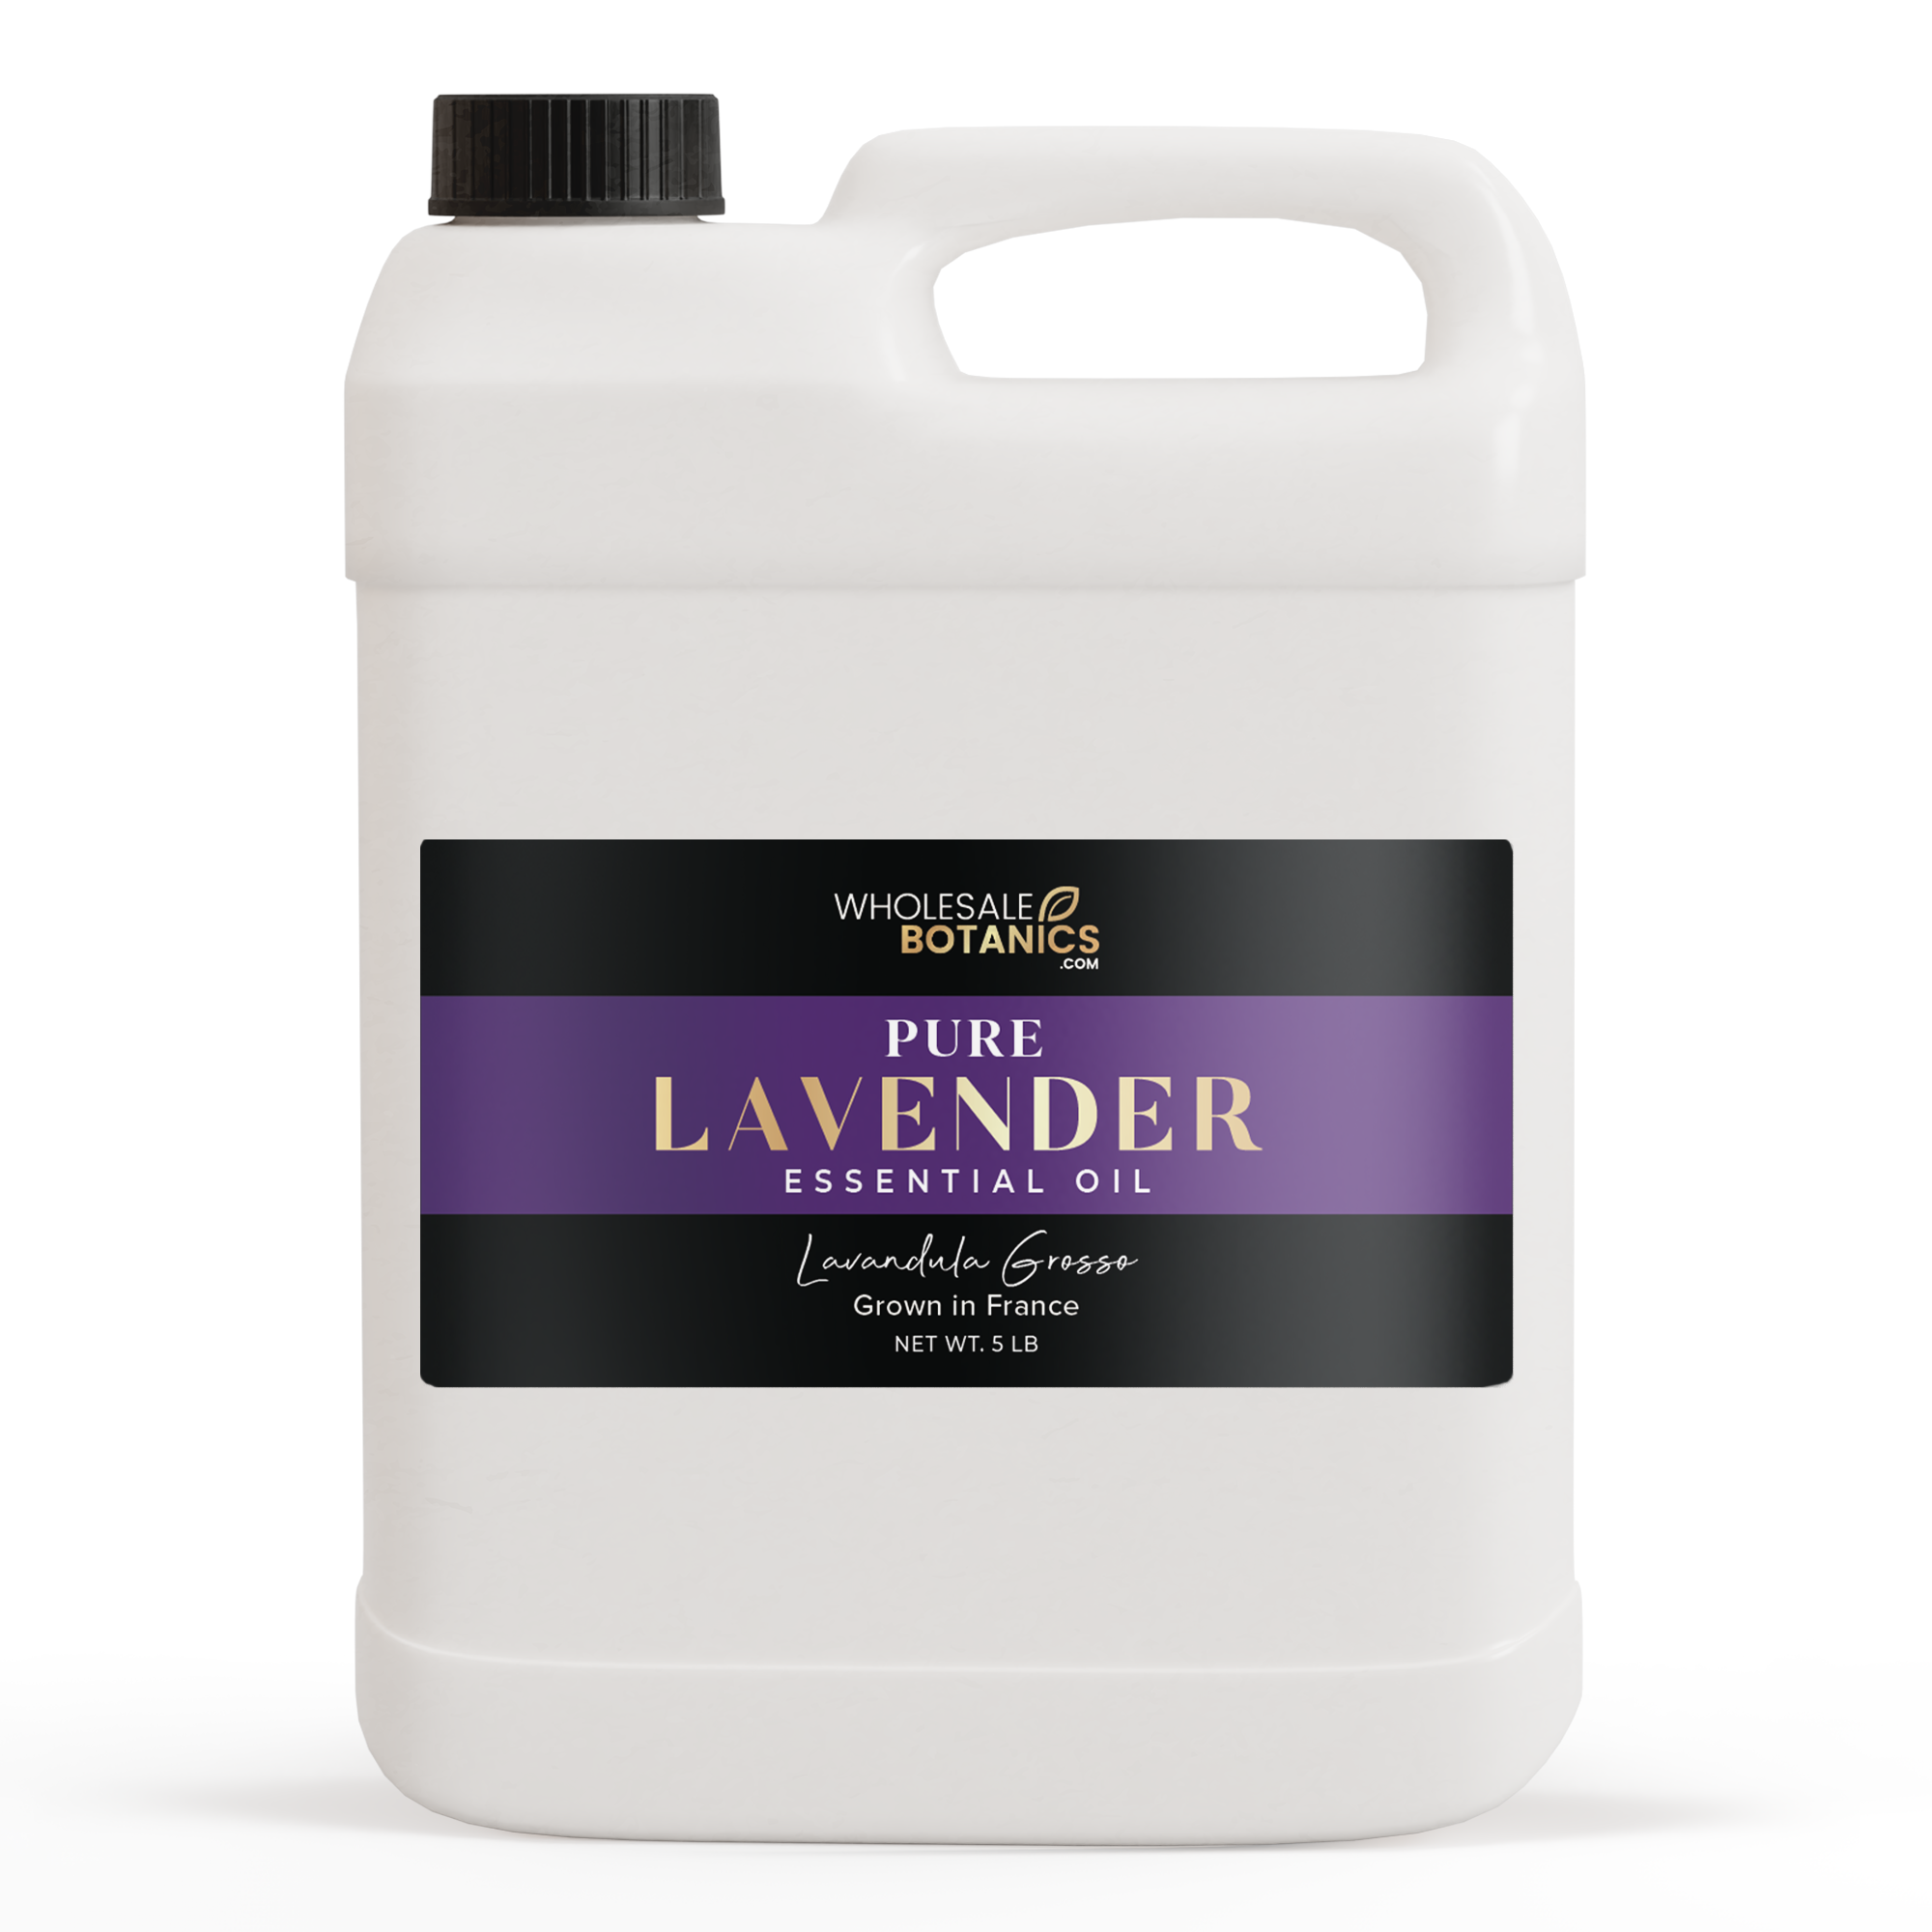 Purity Lavender Essential Oil - Lavandin Grosso - France - 5 lbs